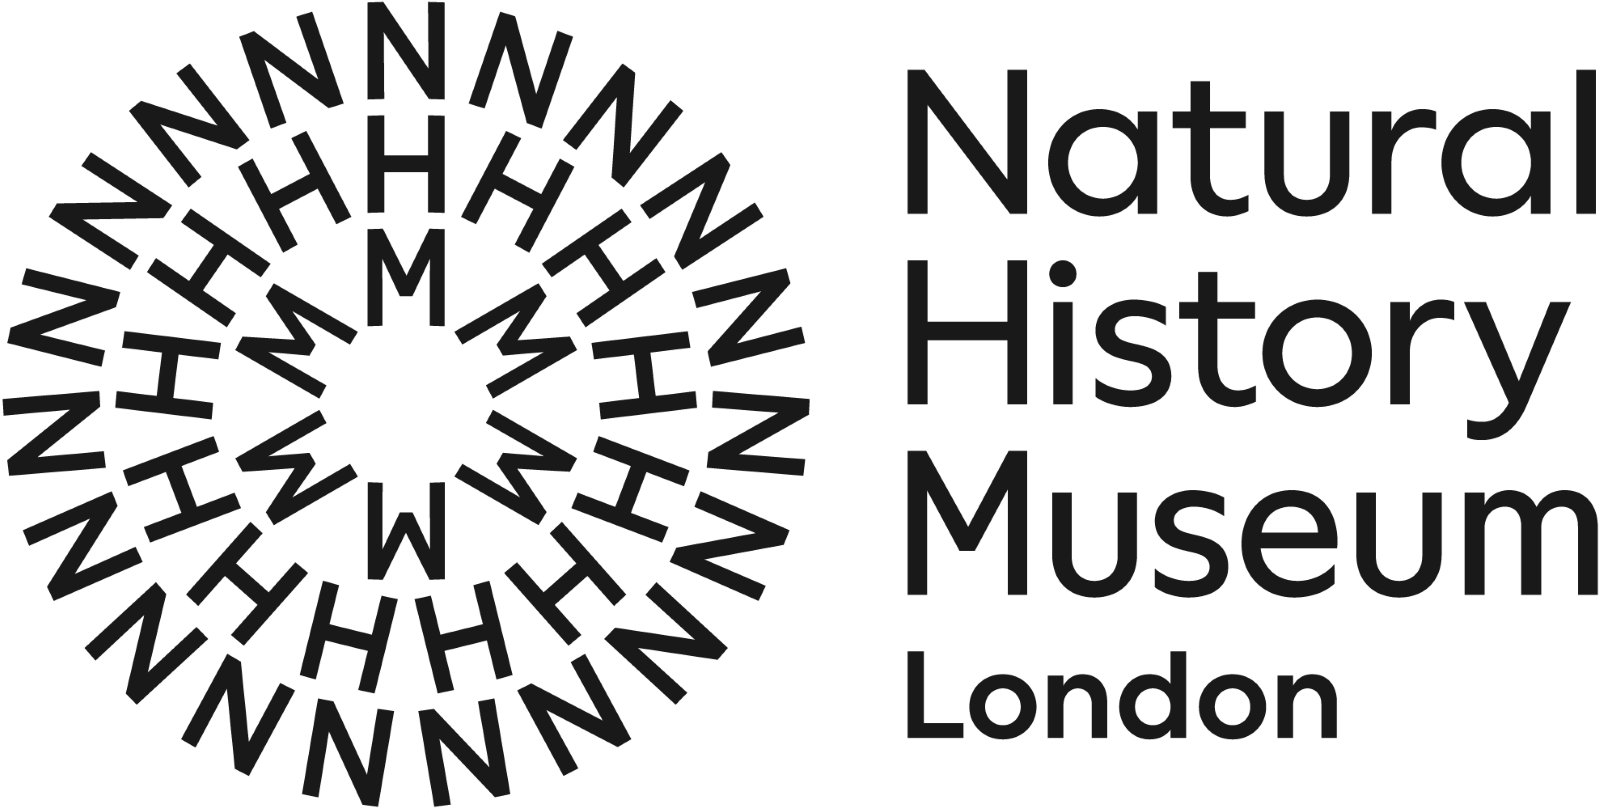 Natural History Museum London logo.